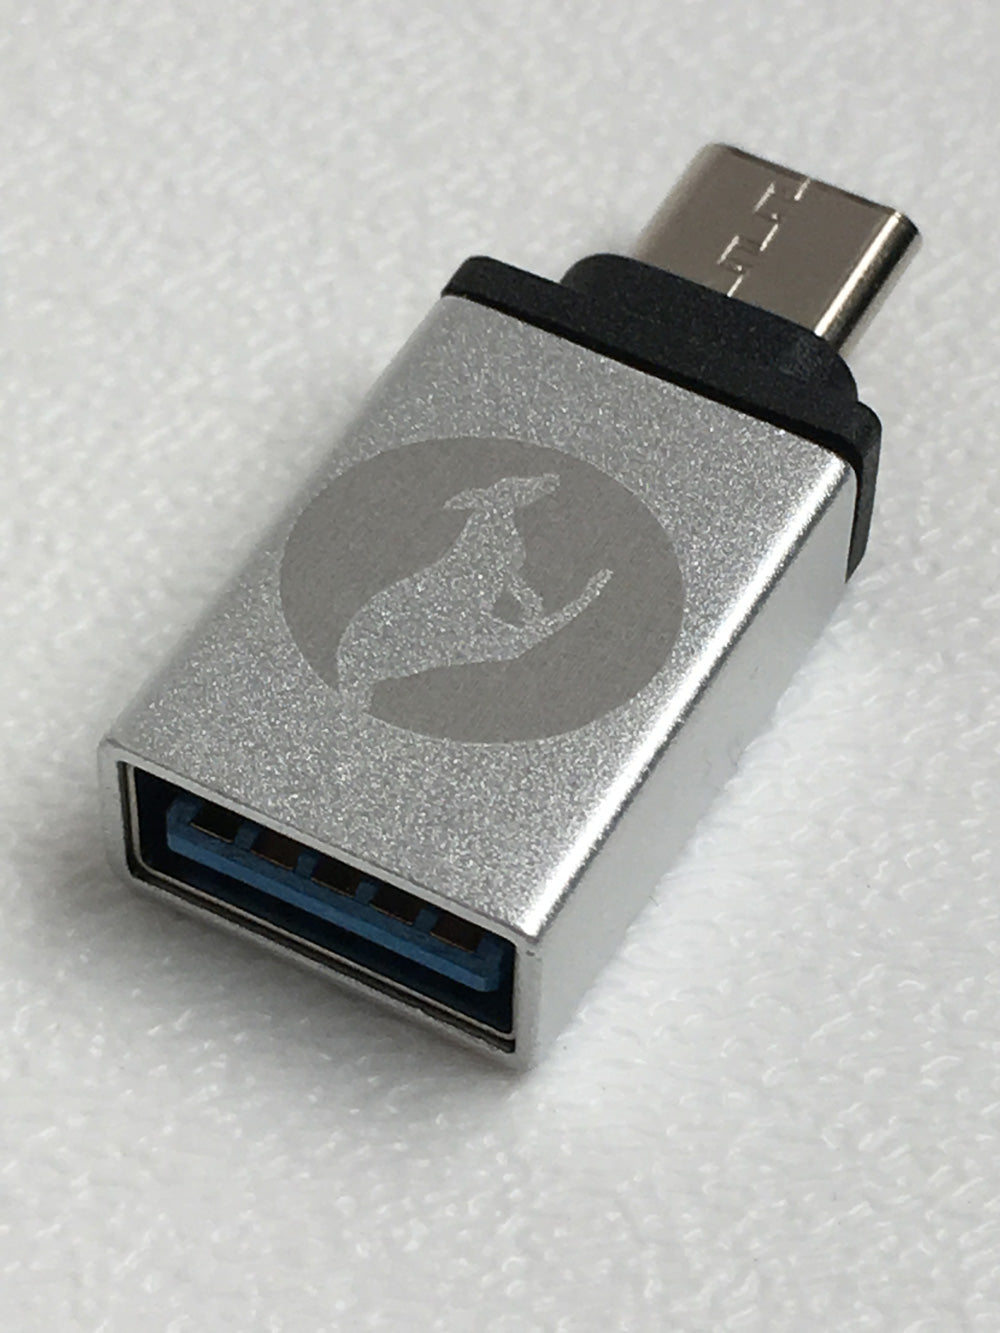 USB 3.0 to USB-C Adapter